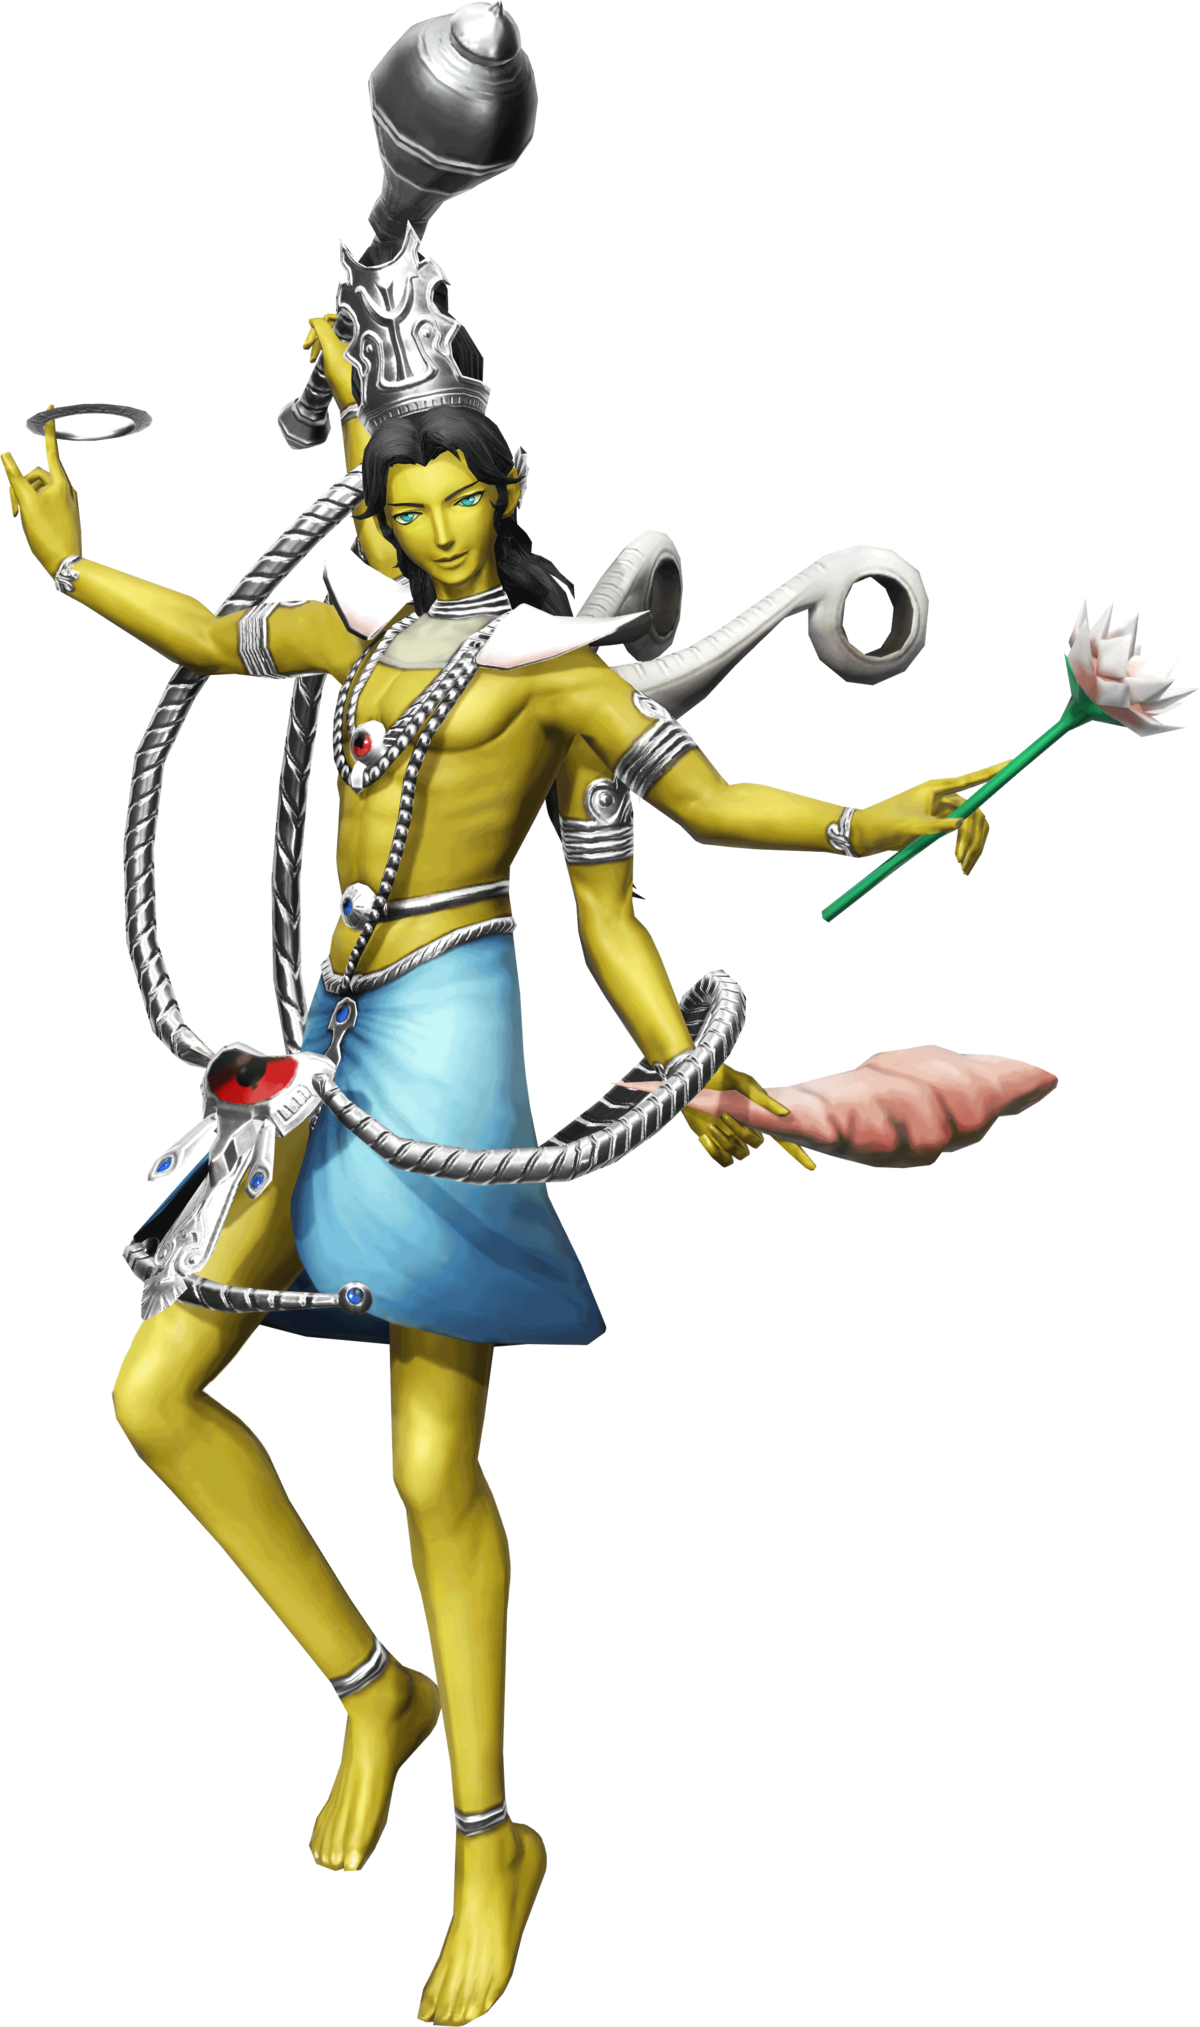 Lord Vishnu PNG Image Background